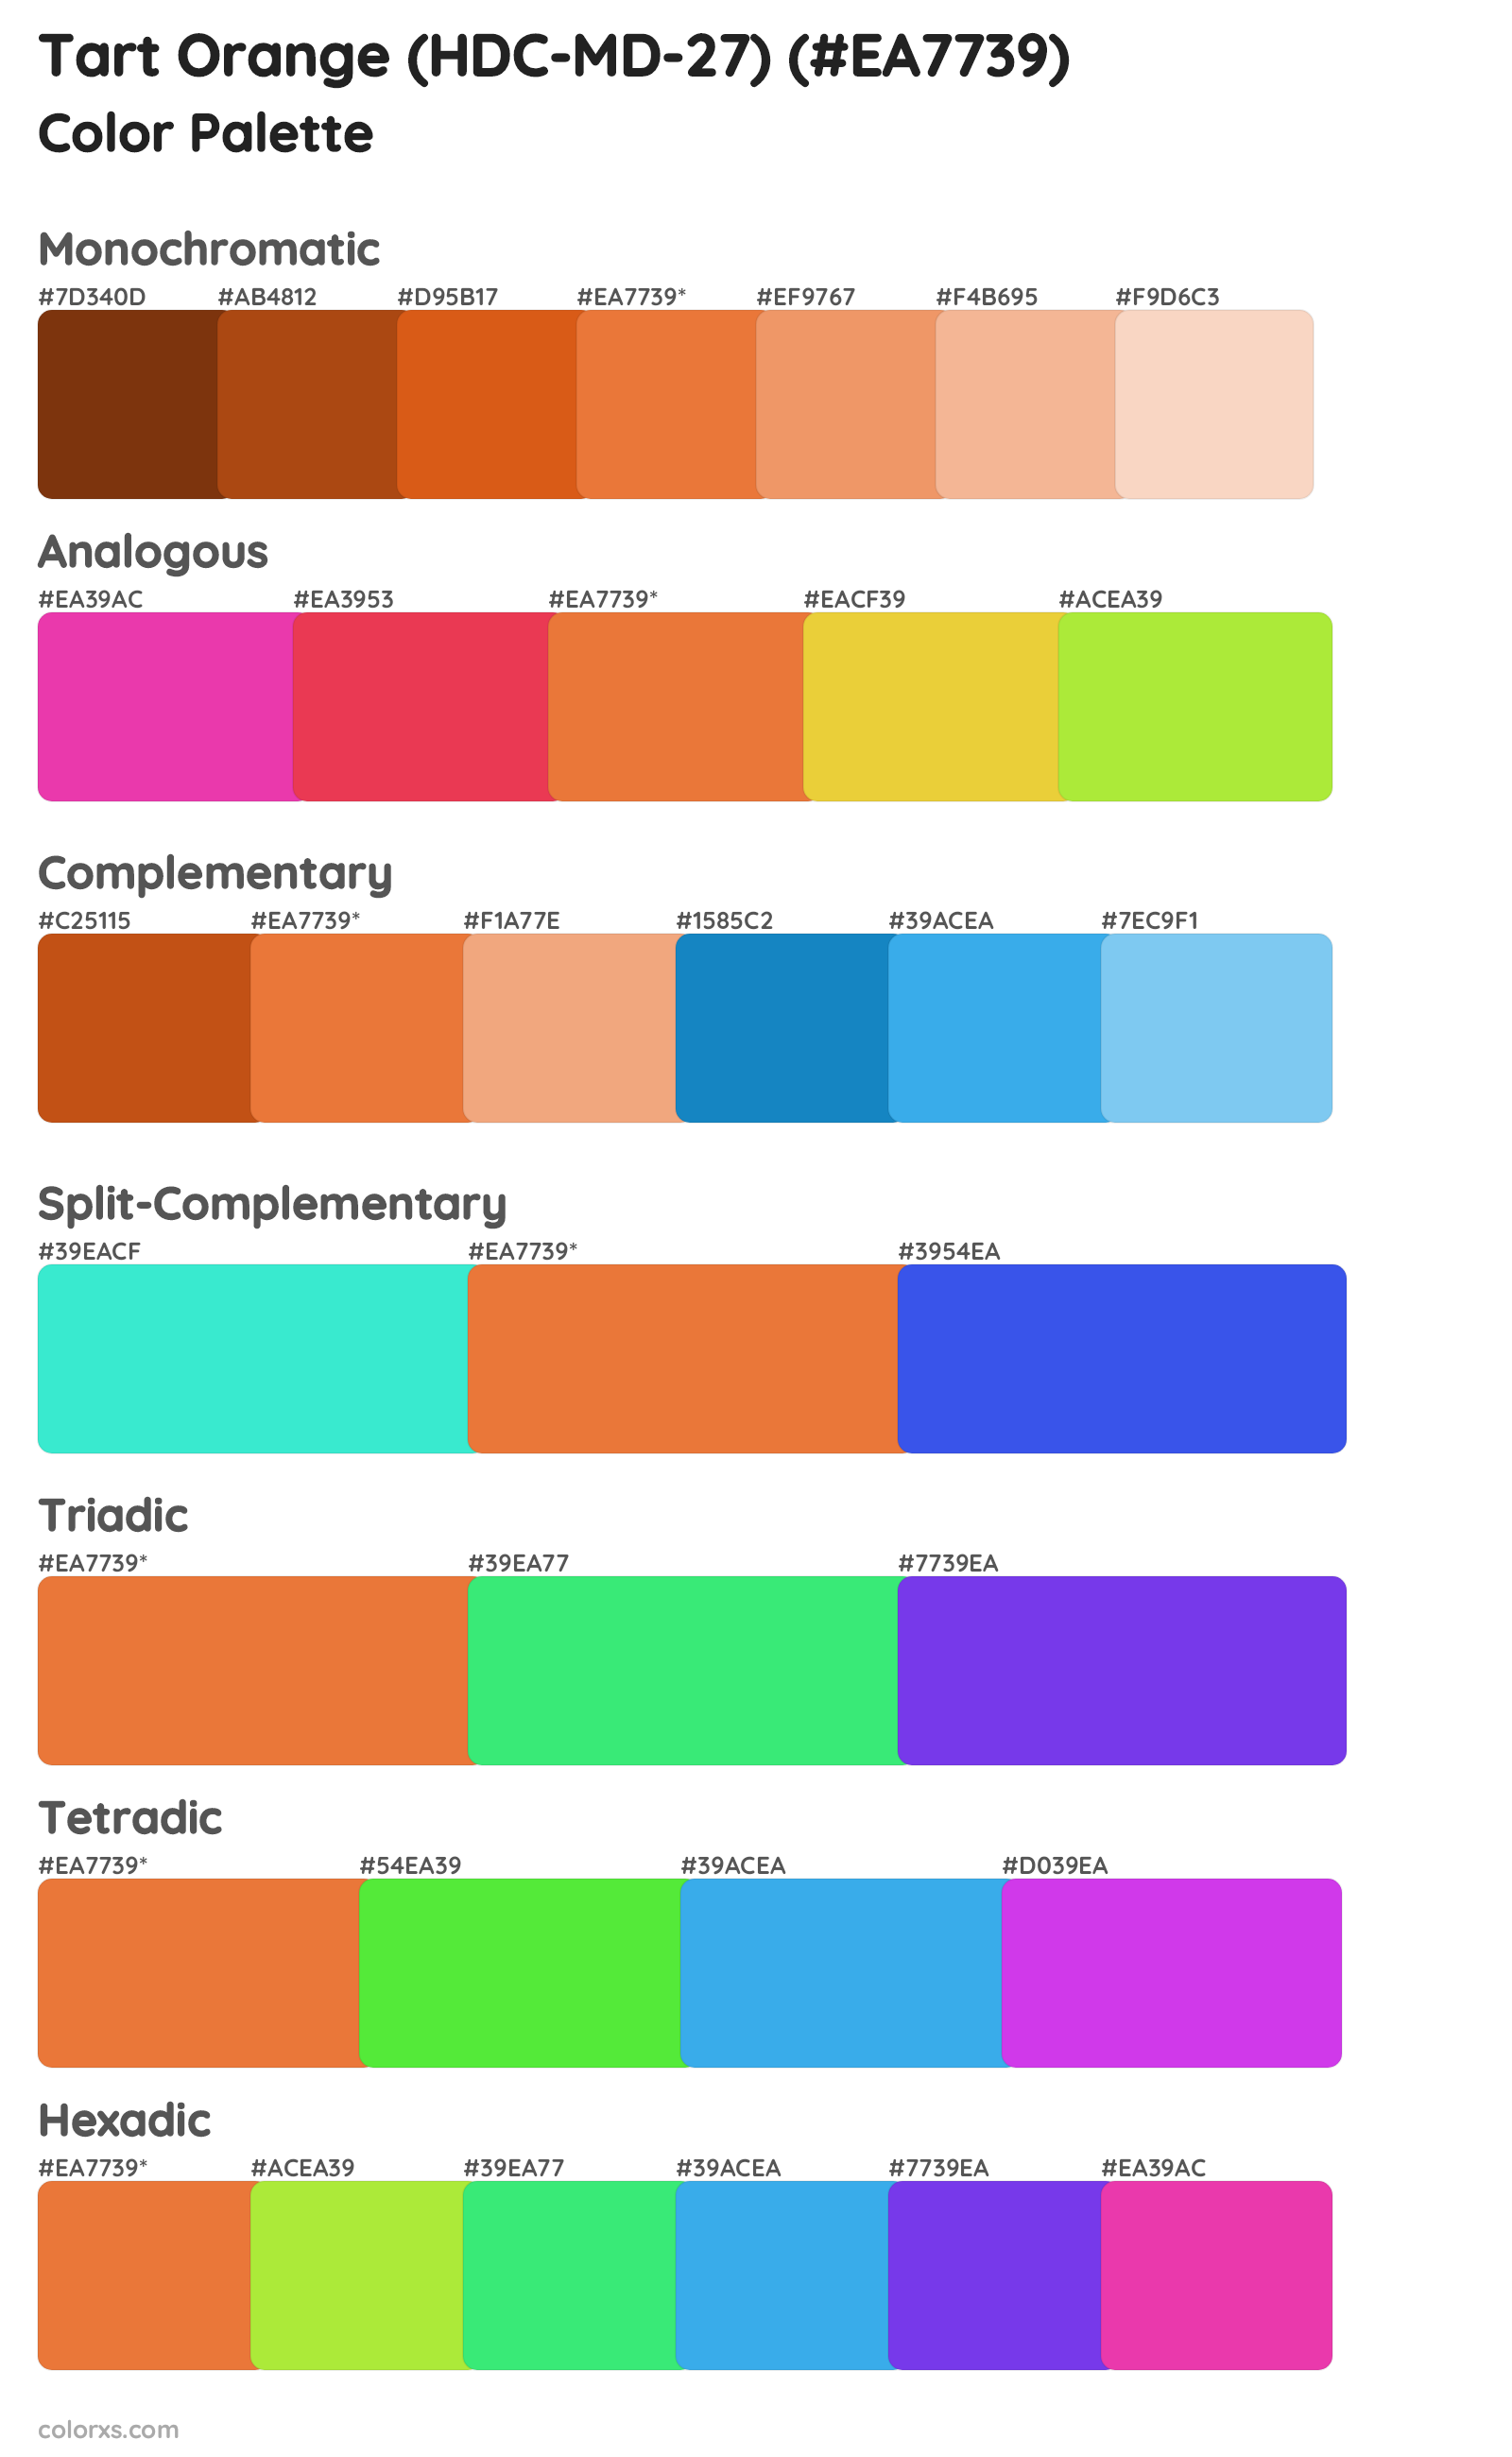 Tart Orange (HDC-MD-27) Color Scheme Palettes